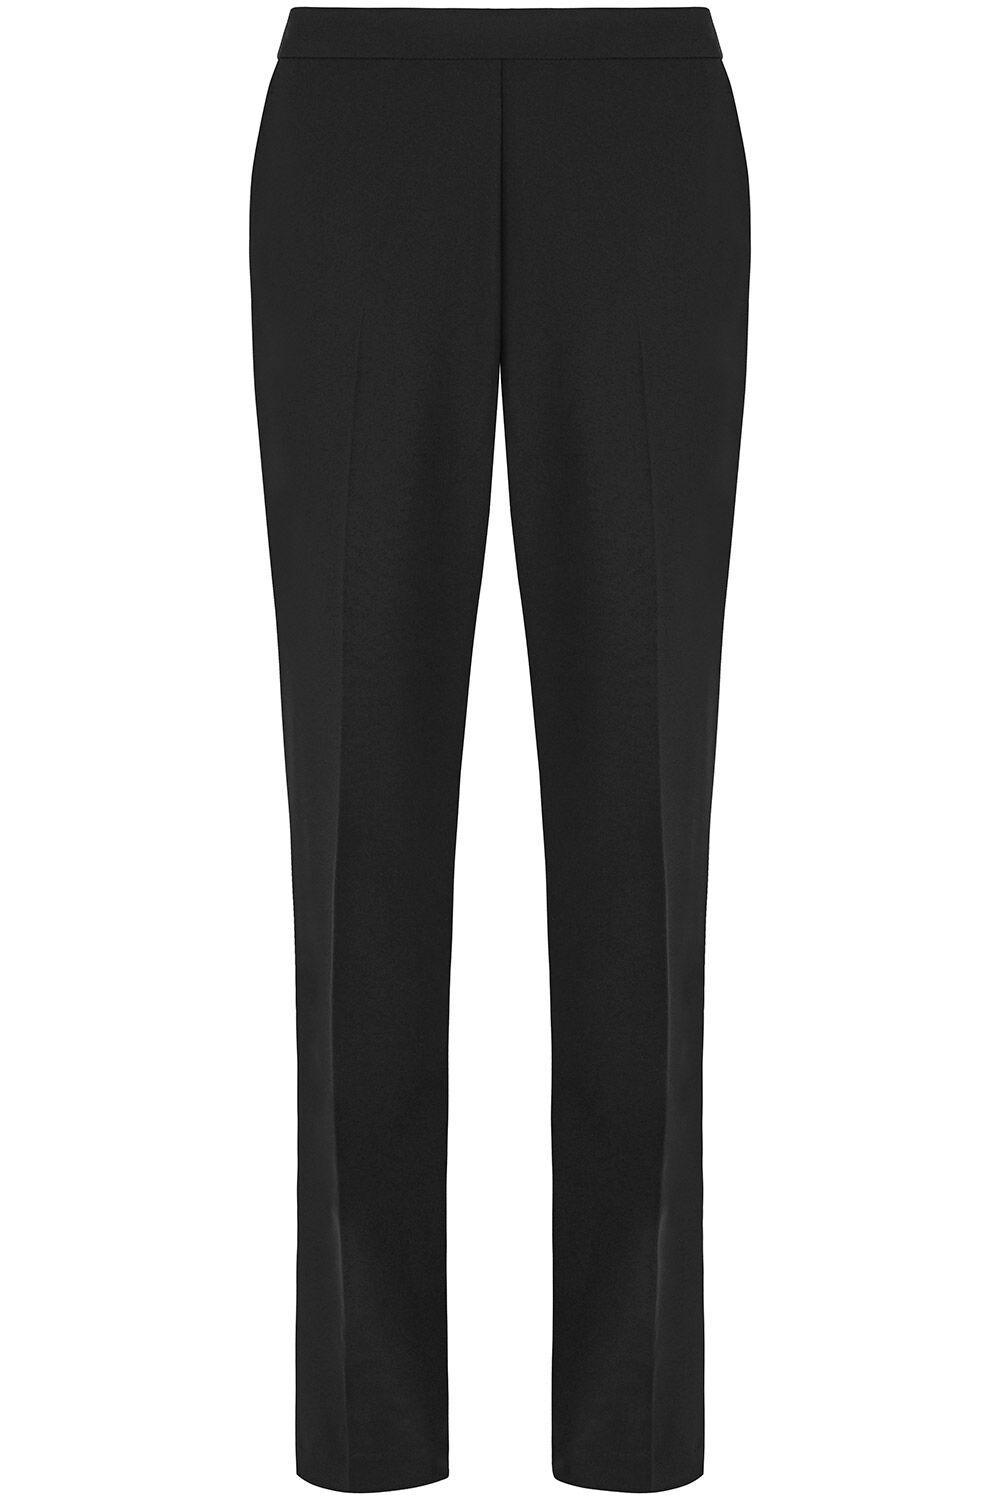 Bonmarche Plain Straight Leg Pull On Trouser - Black, Size: 18